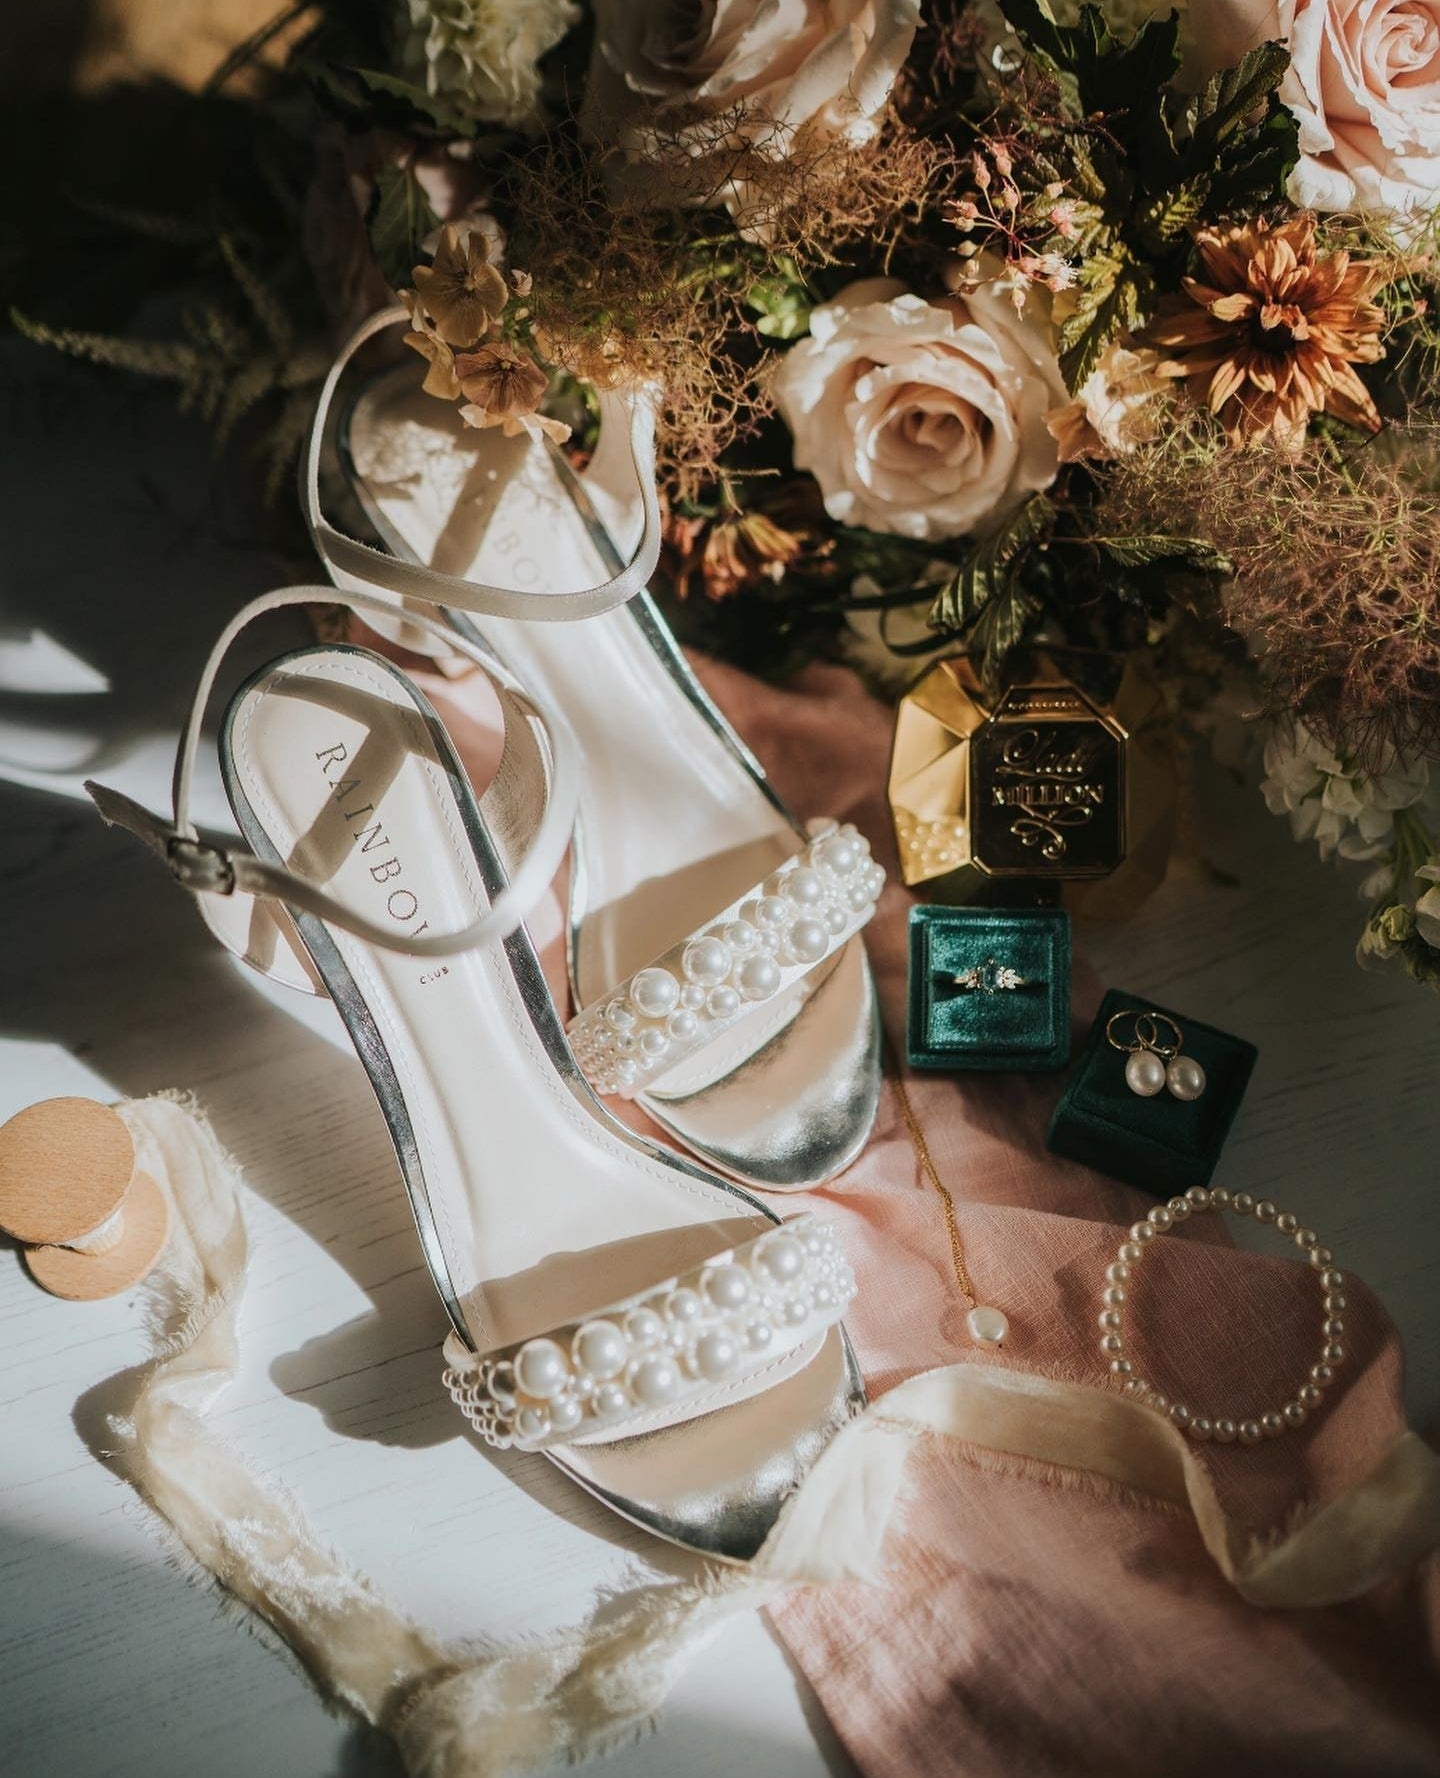 Emma - Wide Fit Pearl Detail Wedding Sandals